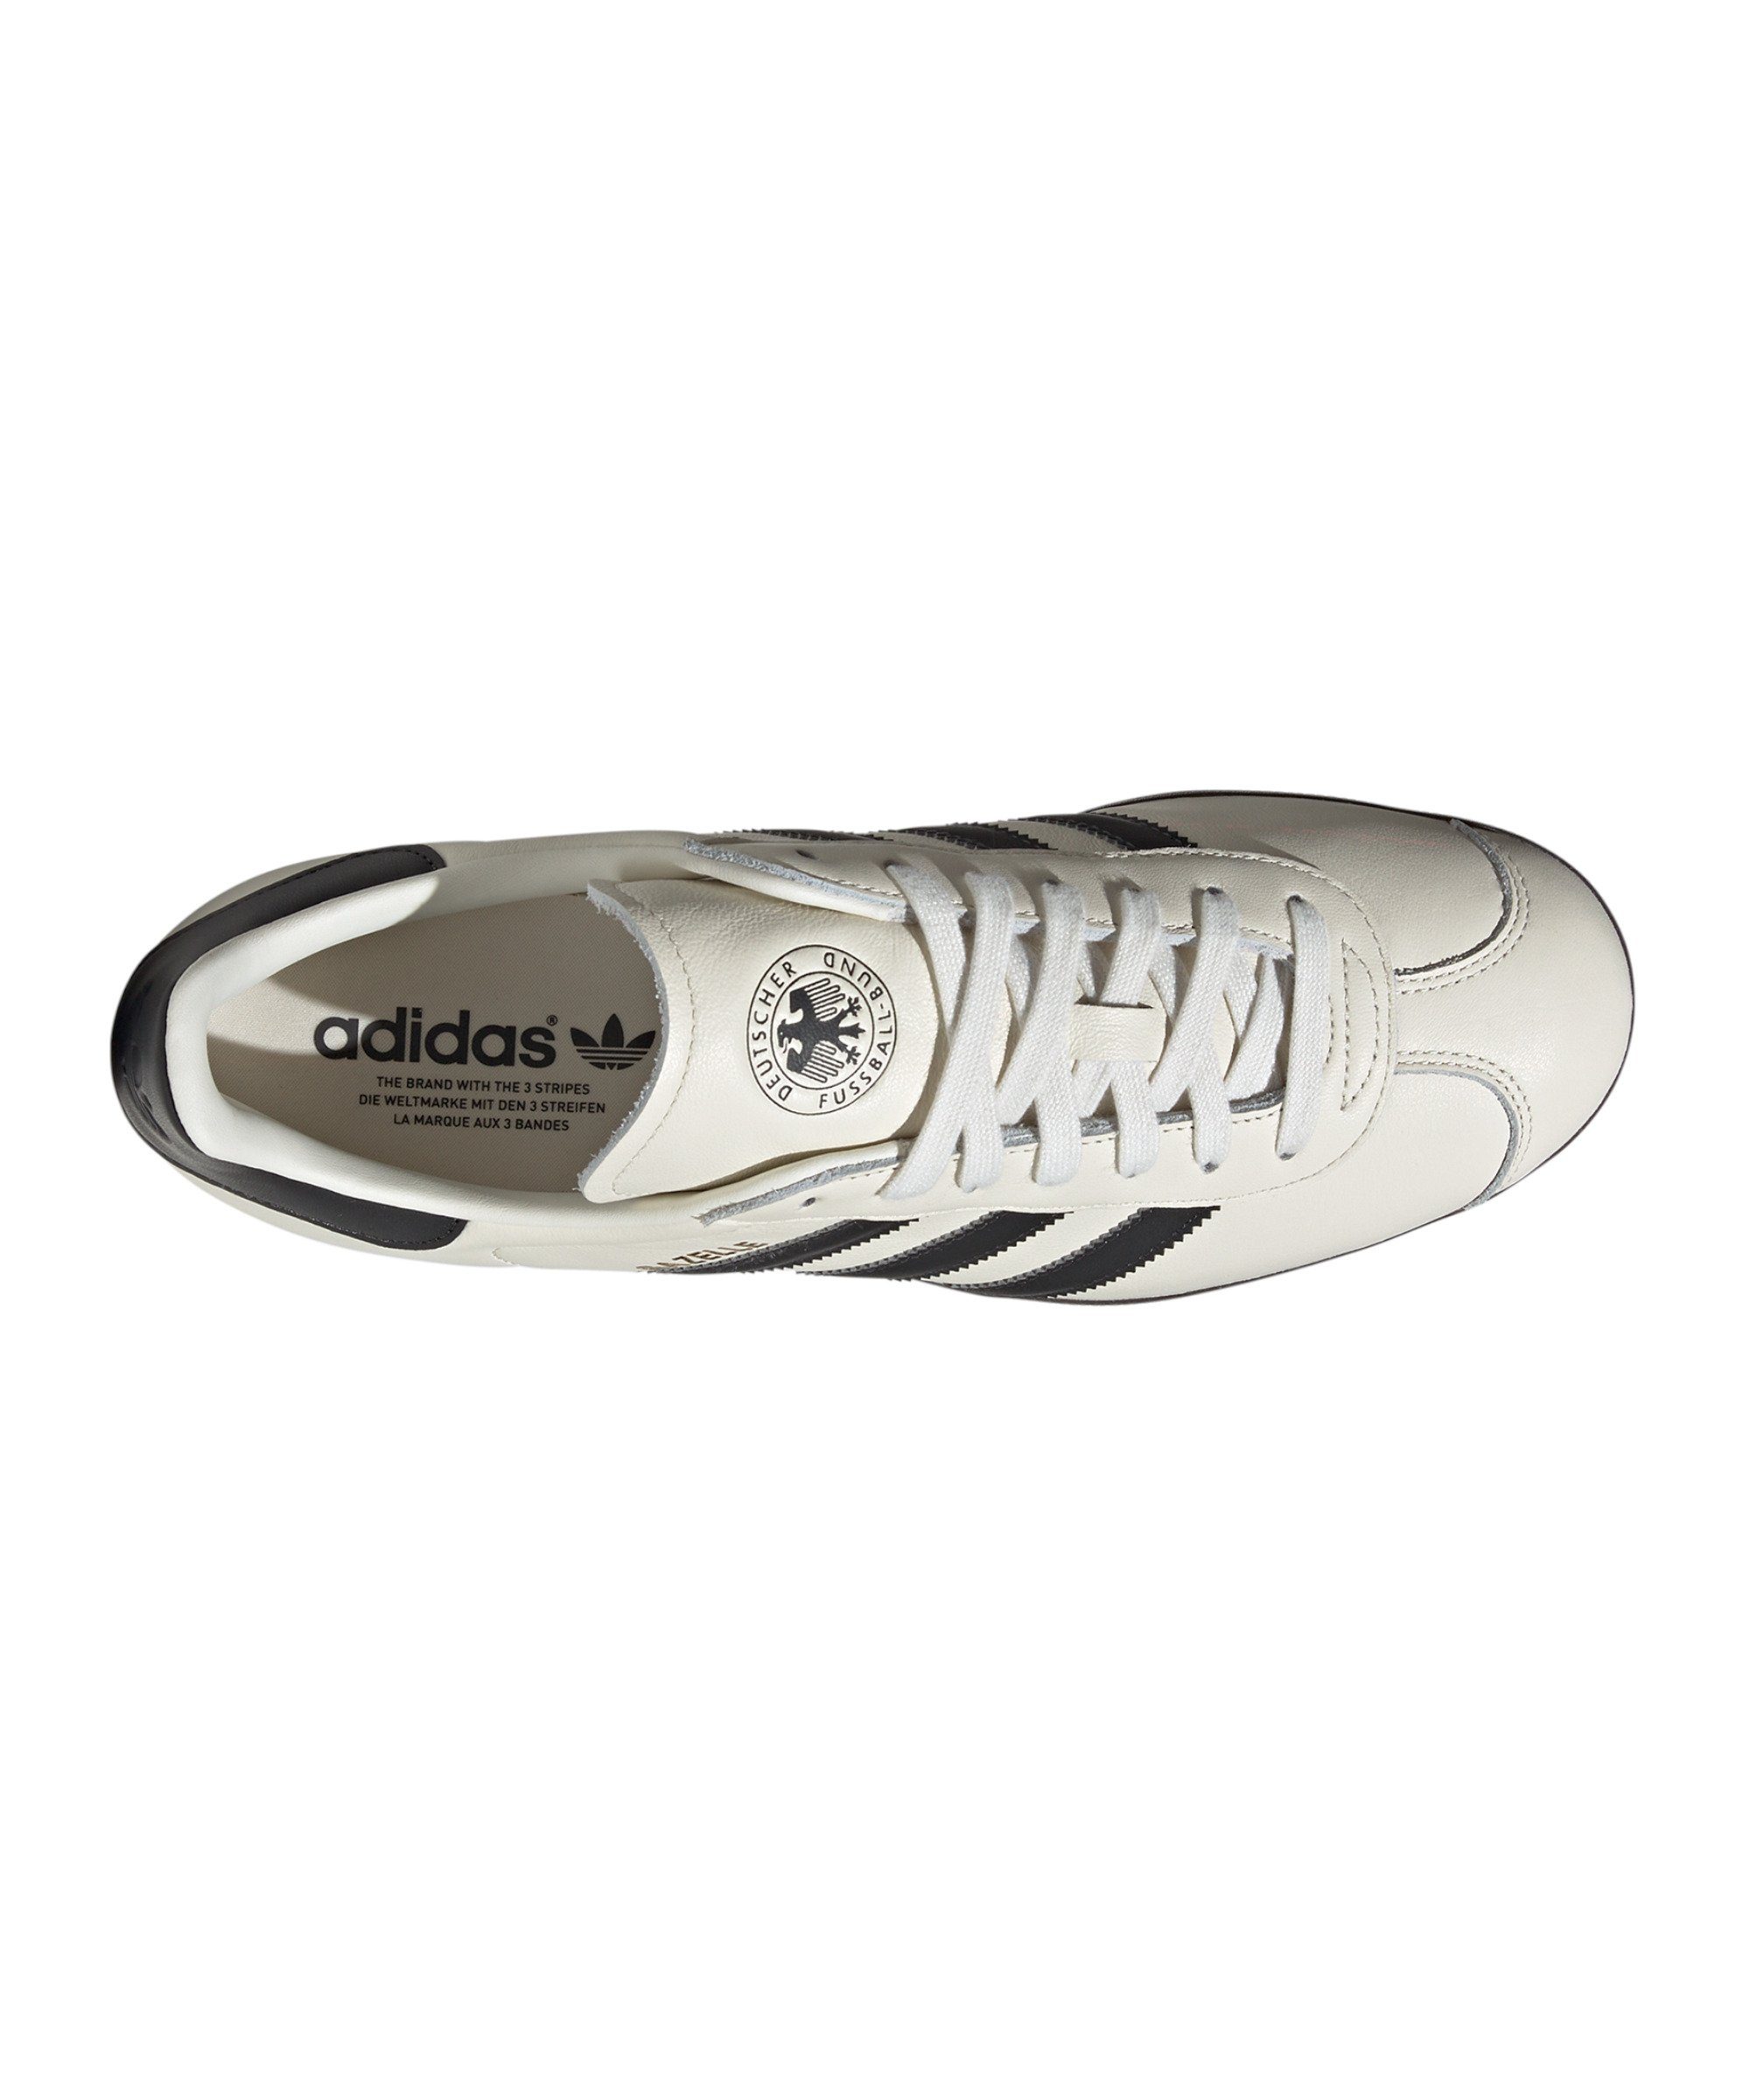 adidas Originals Gazelle DFB Sneaker x